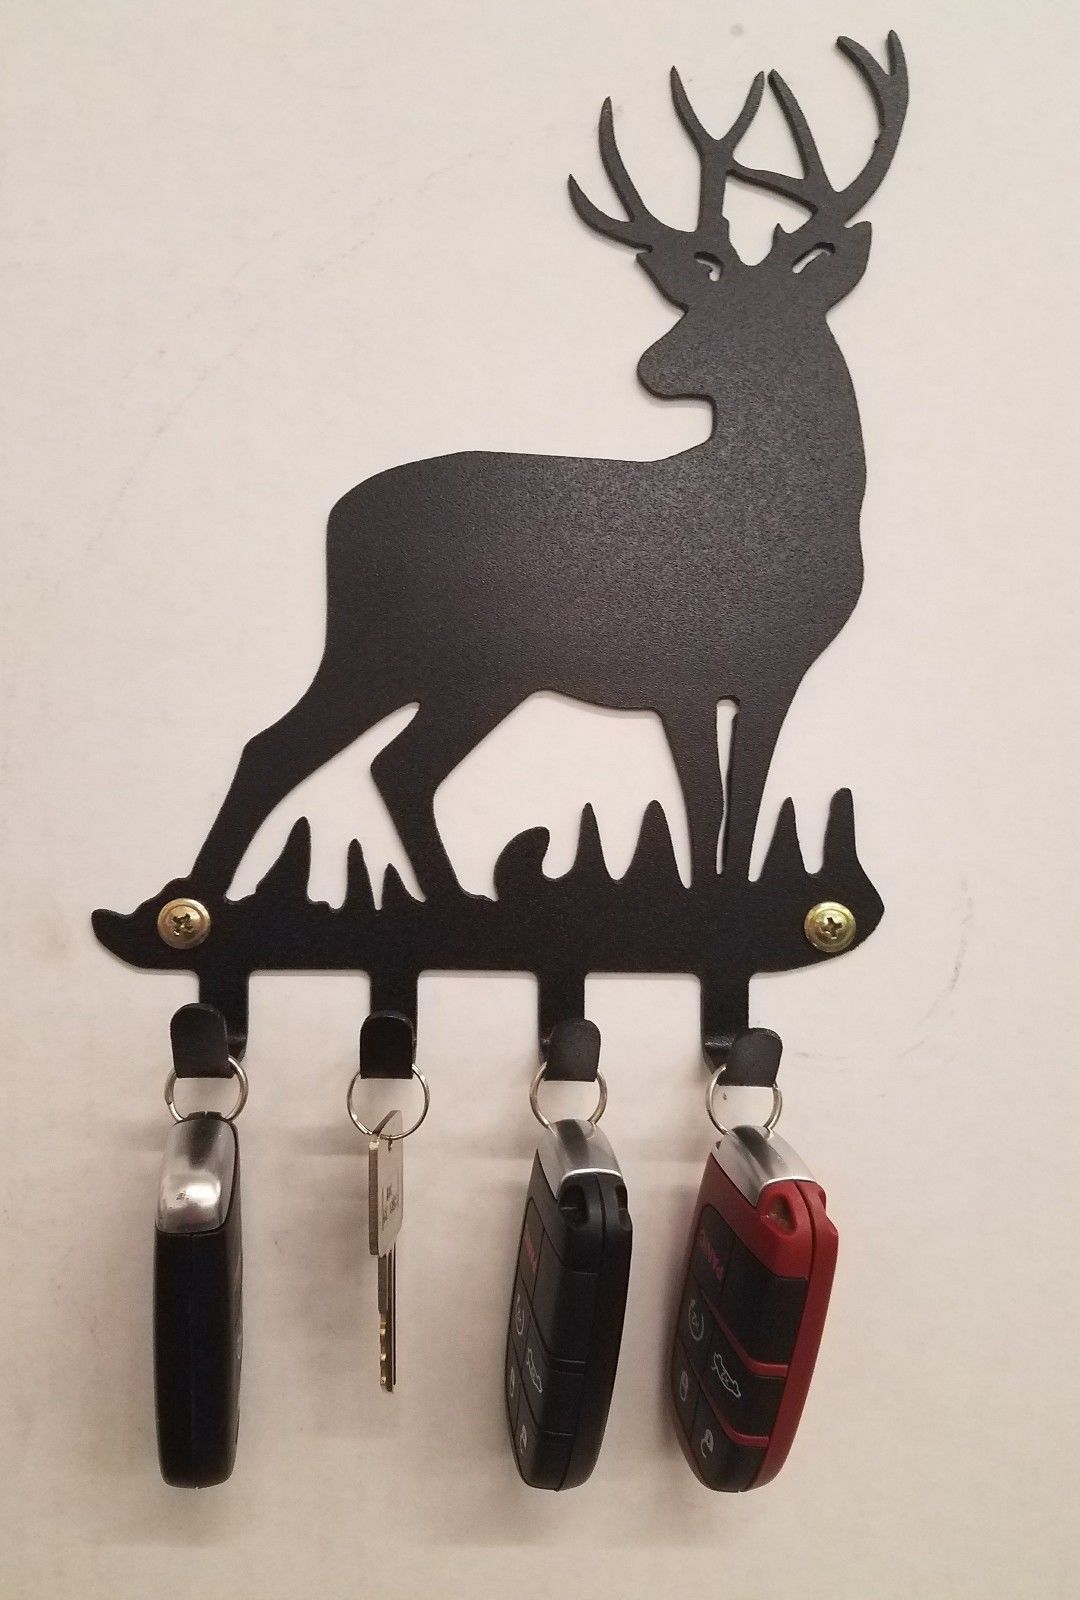 Duck in sawblade landing metal wall art plasma cut decor cattails hunter gift 